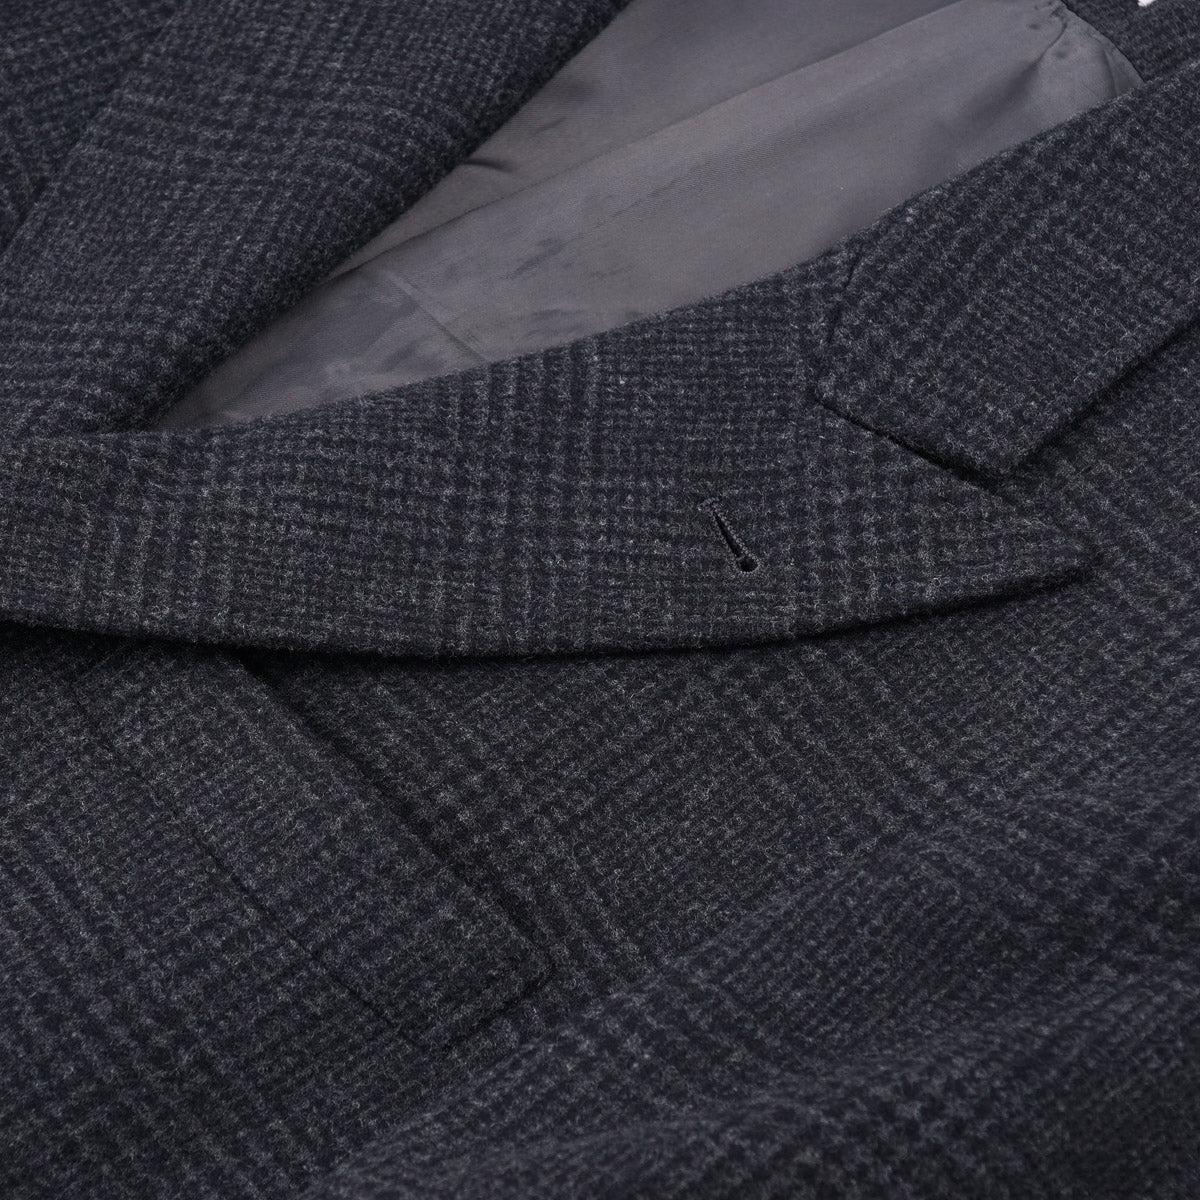 Brunello Cucinelli Slim-Fit Wool Overcoat - Top Shelf Apparel